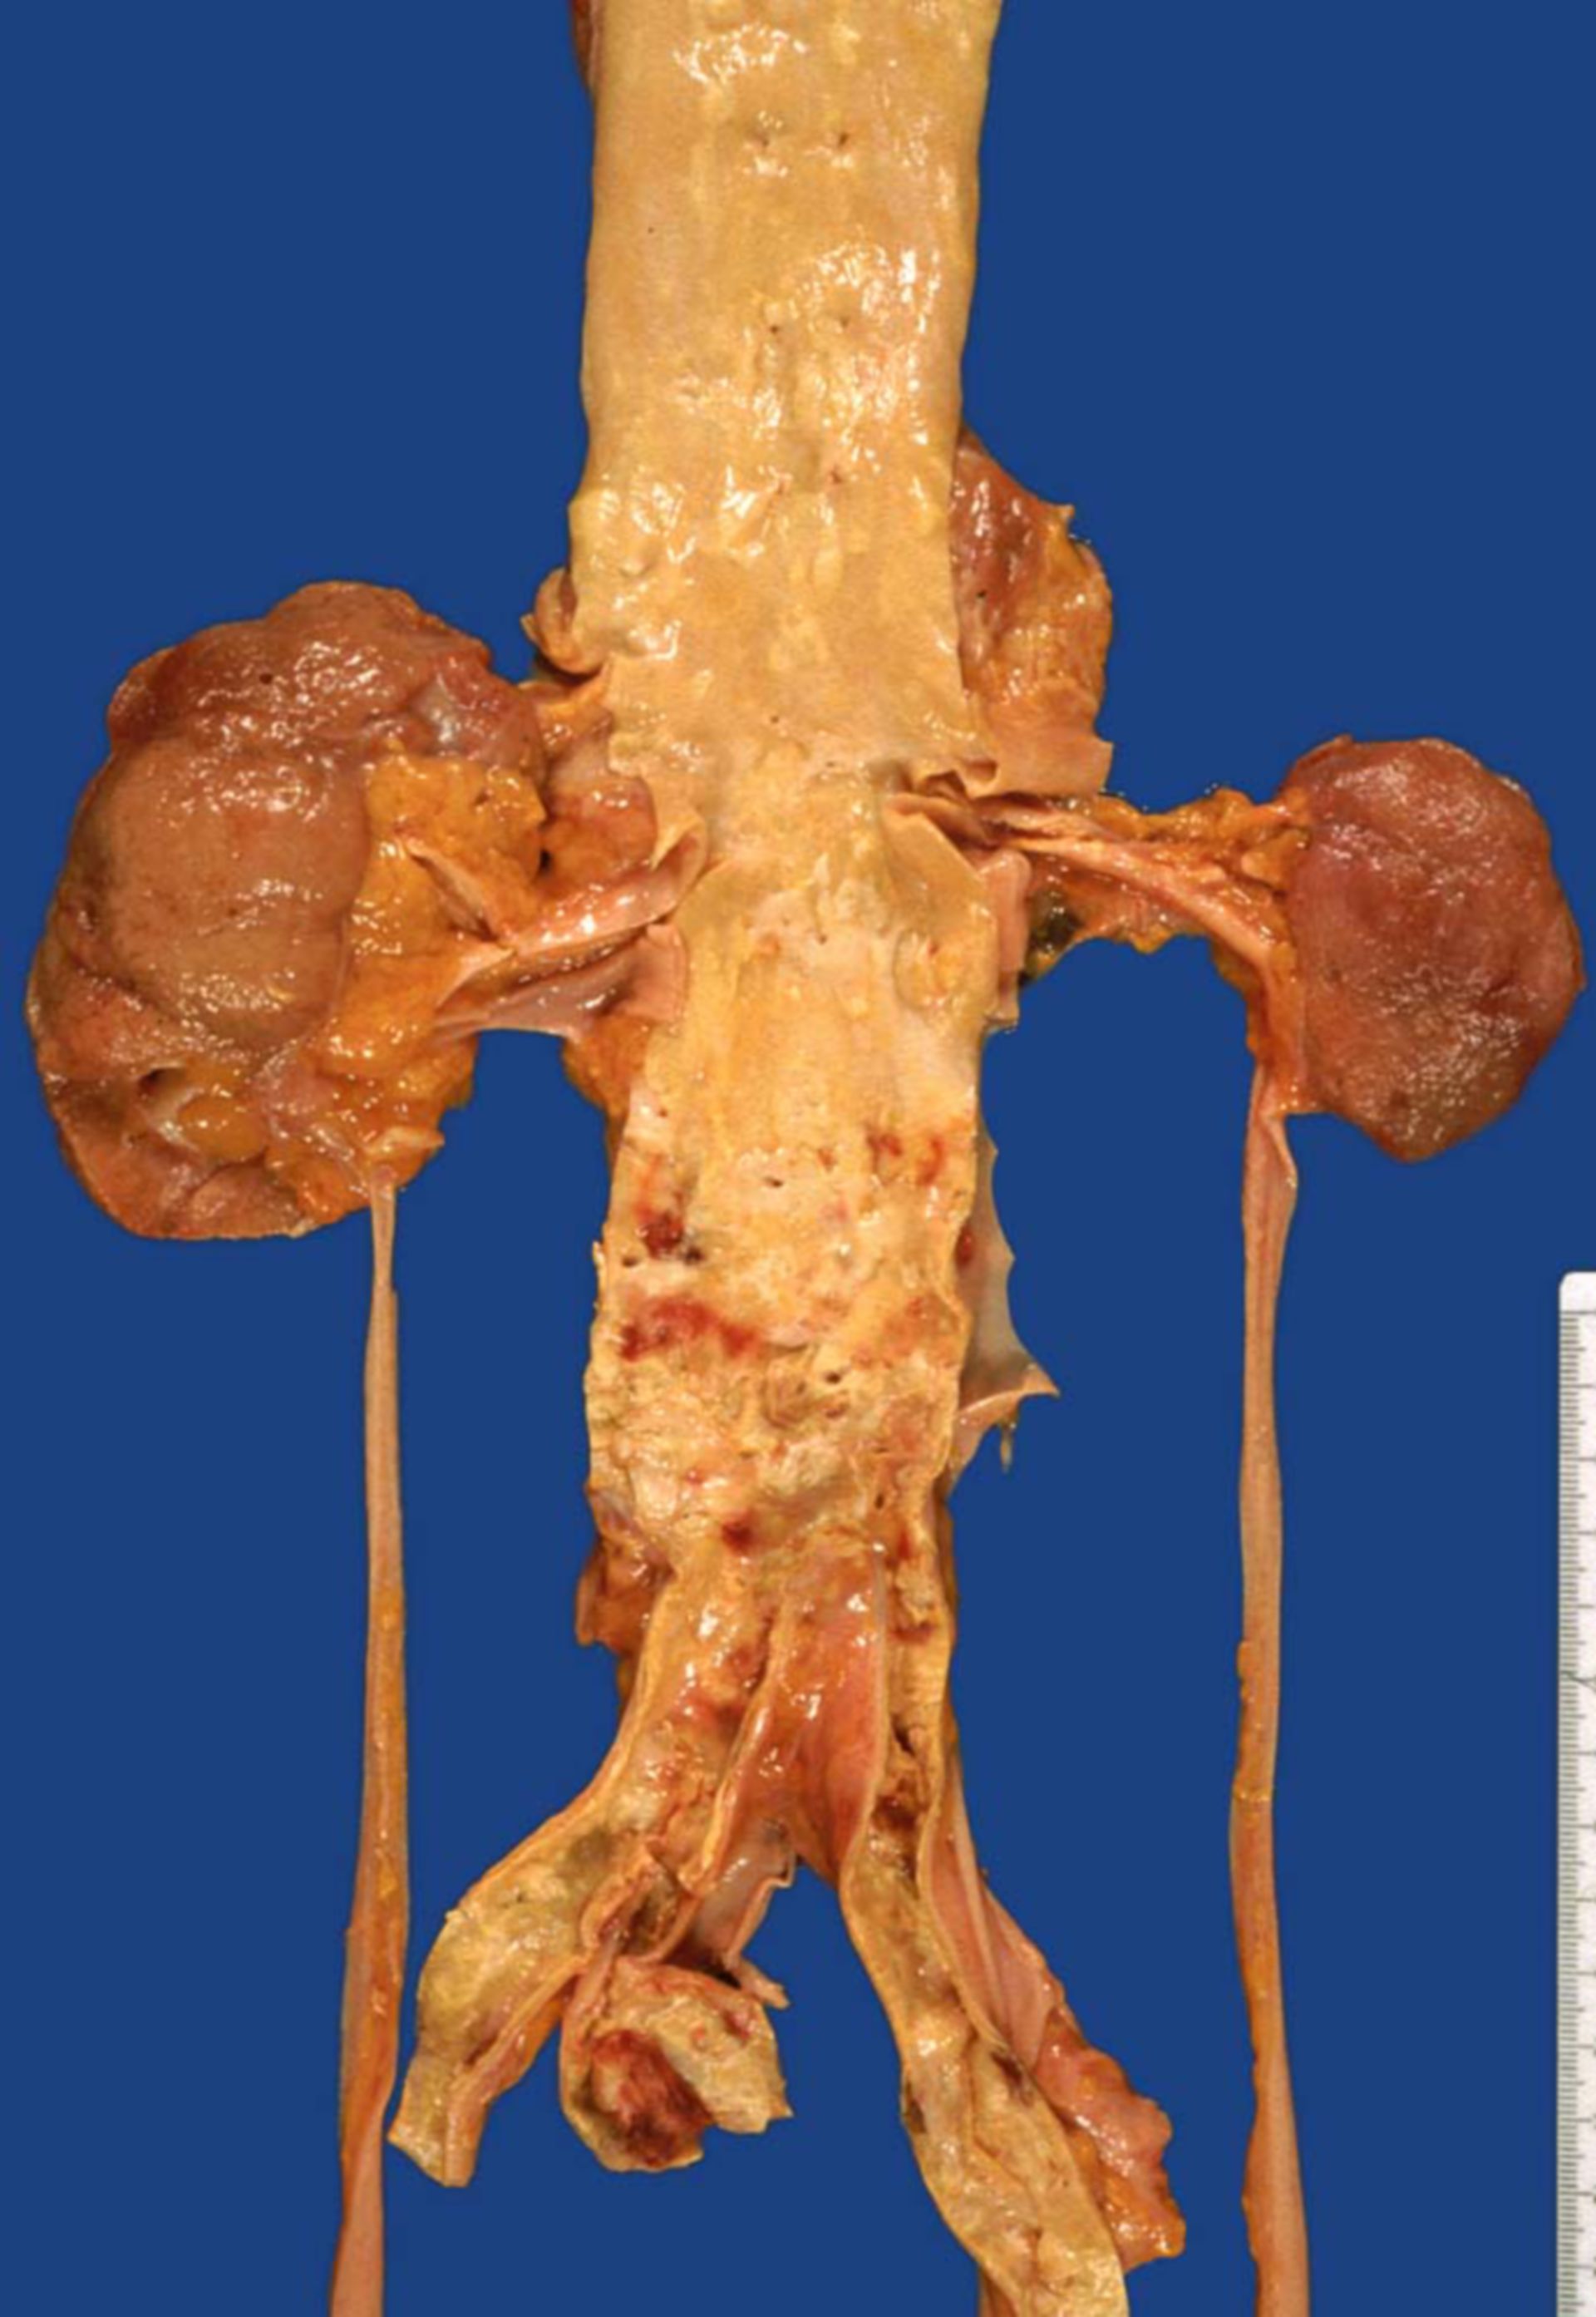 Shrunken kidney - obstruction of right renal artery